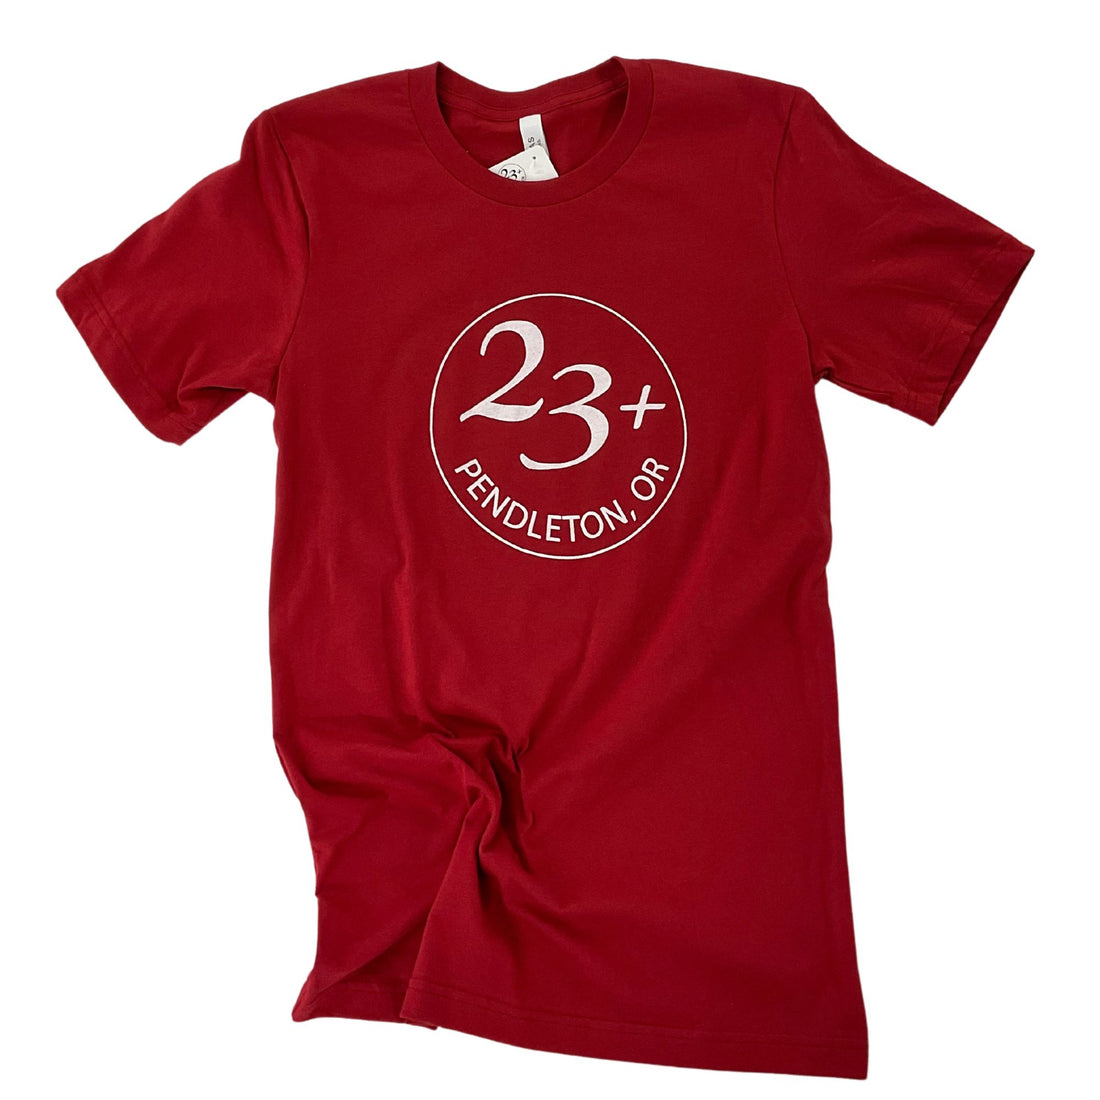 23+ Logo T-shirt Crew Neck- Red